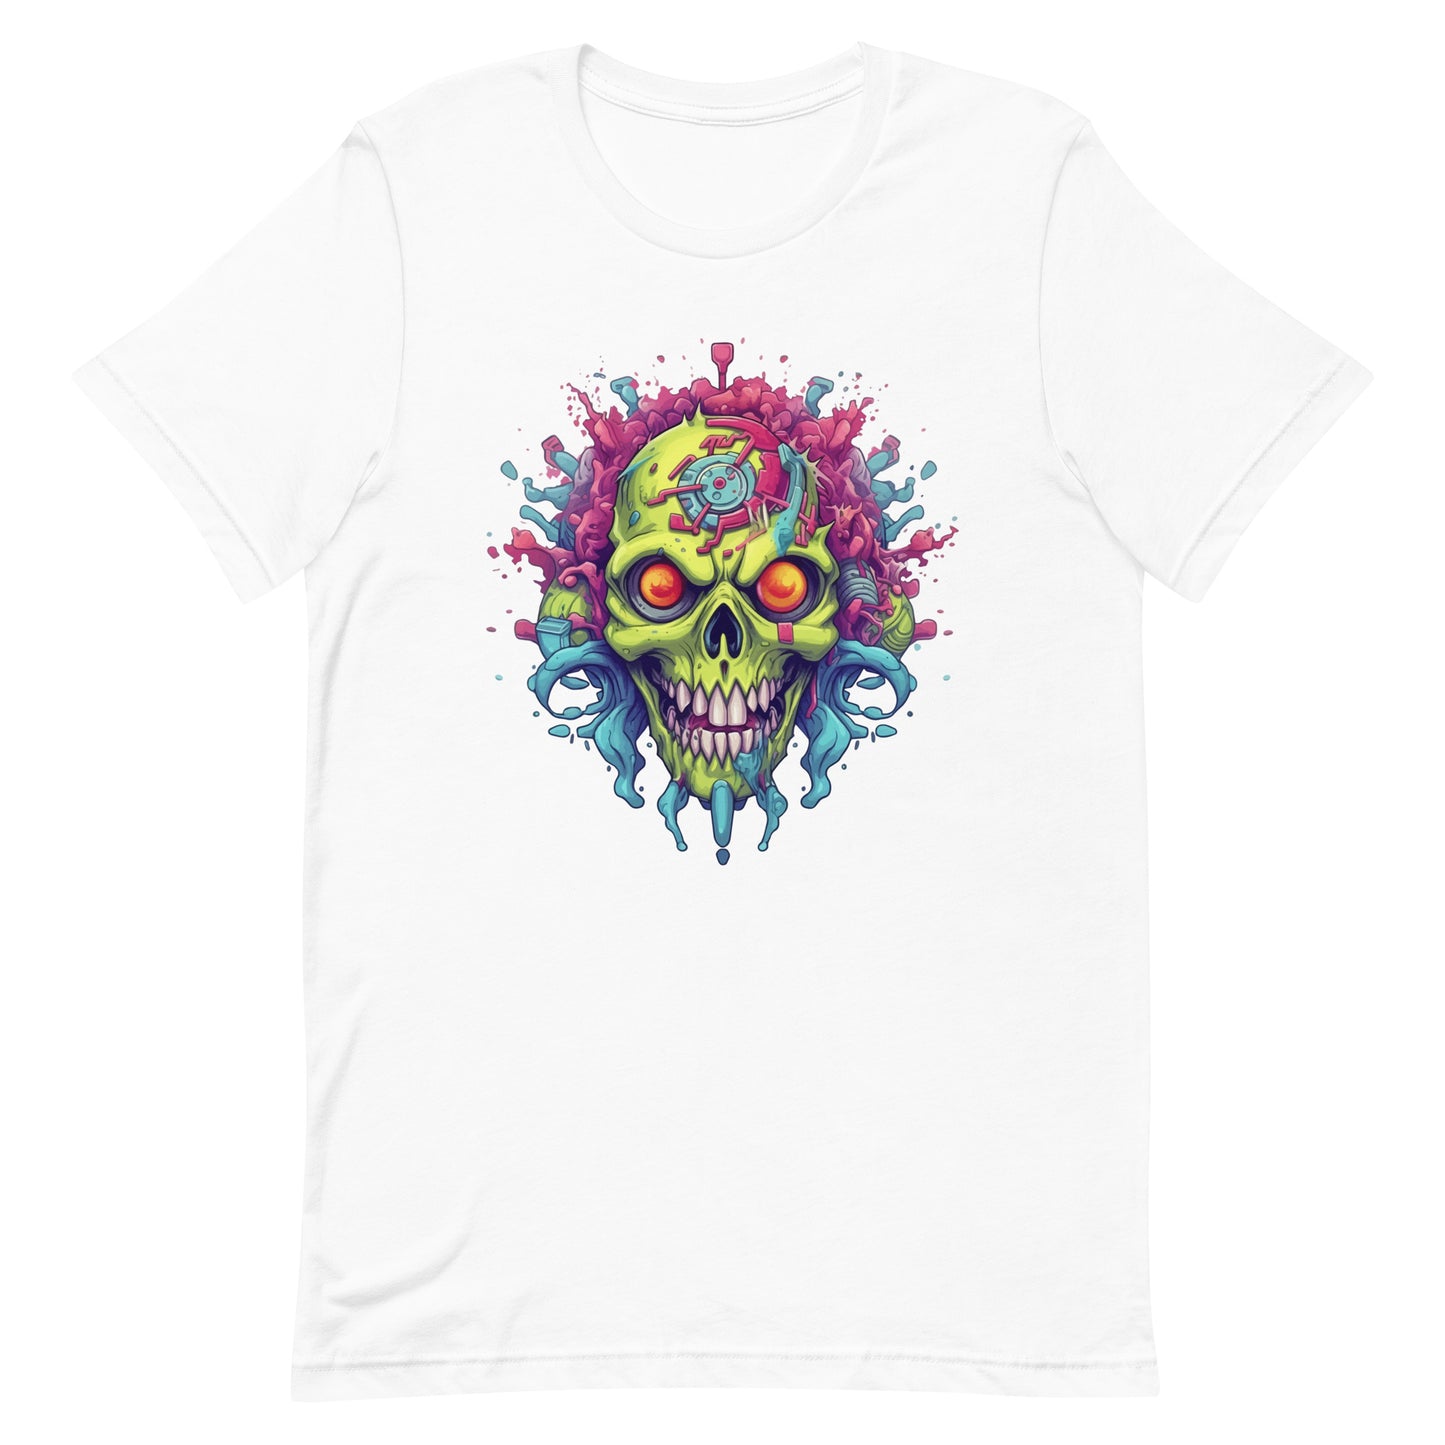 2d game art, Hellish skull, Electronic zombie, Colorful splashes, Cyberpunk futurism, Graffiti style illustration, Neon electric colors - Unisex t-shirt